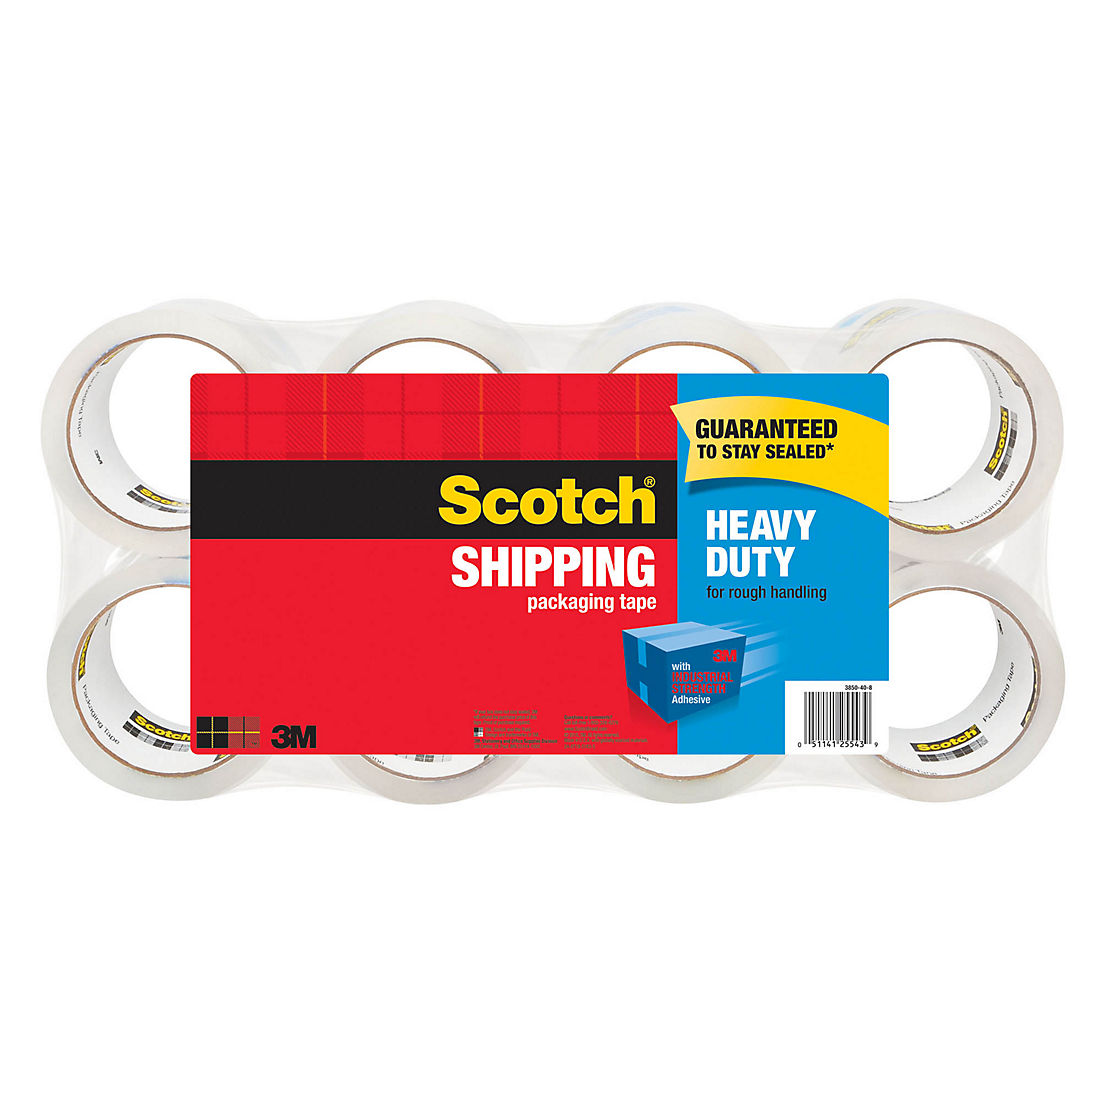 Scotch Heavy-Duty Shipping Packaging Tape